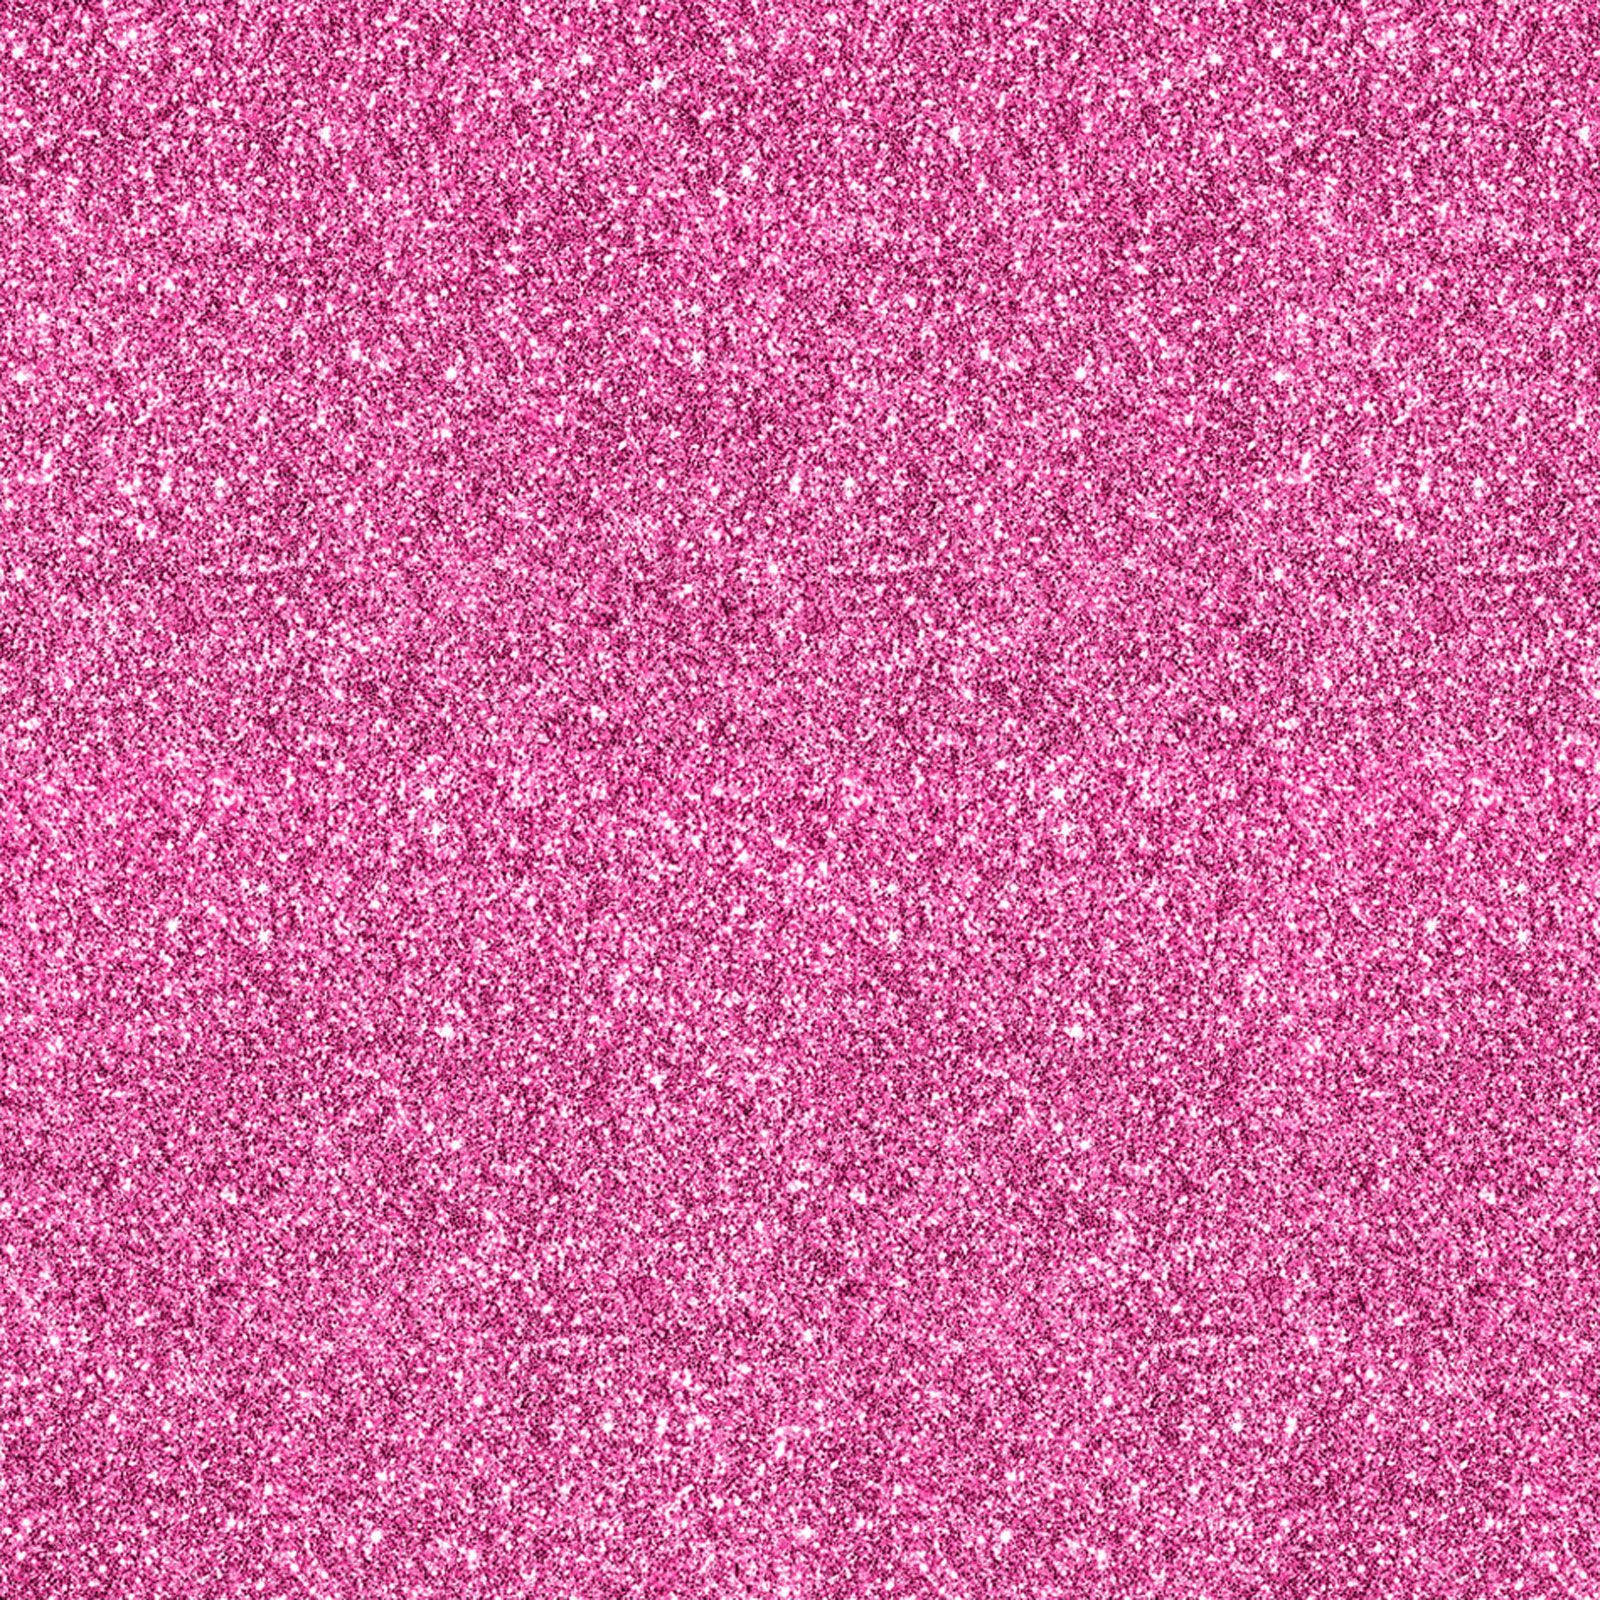 Grainy Pink Glitters Wallpaper